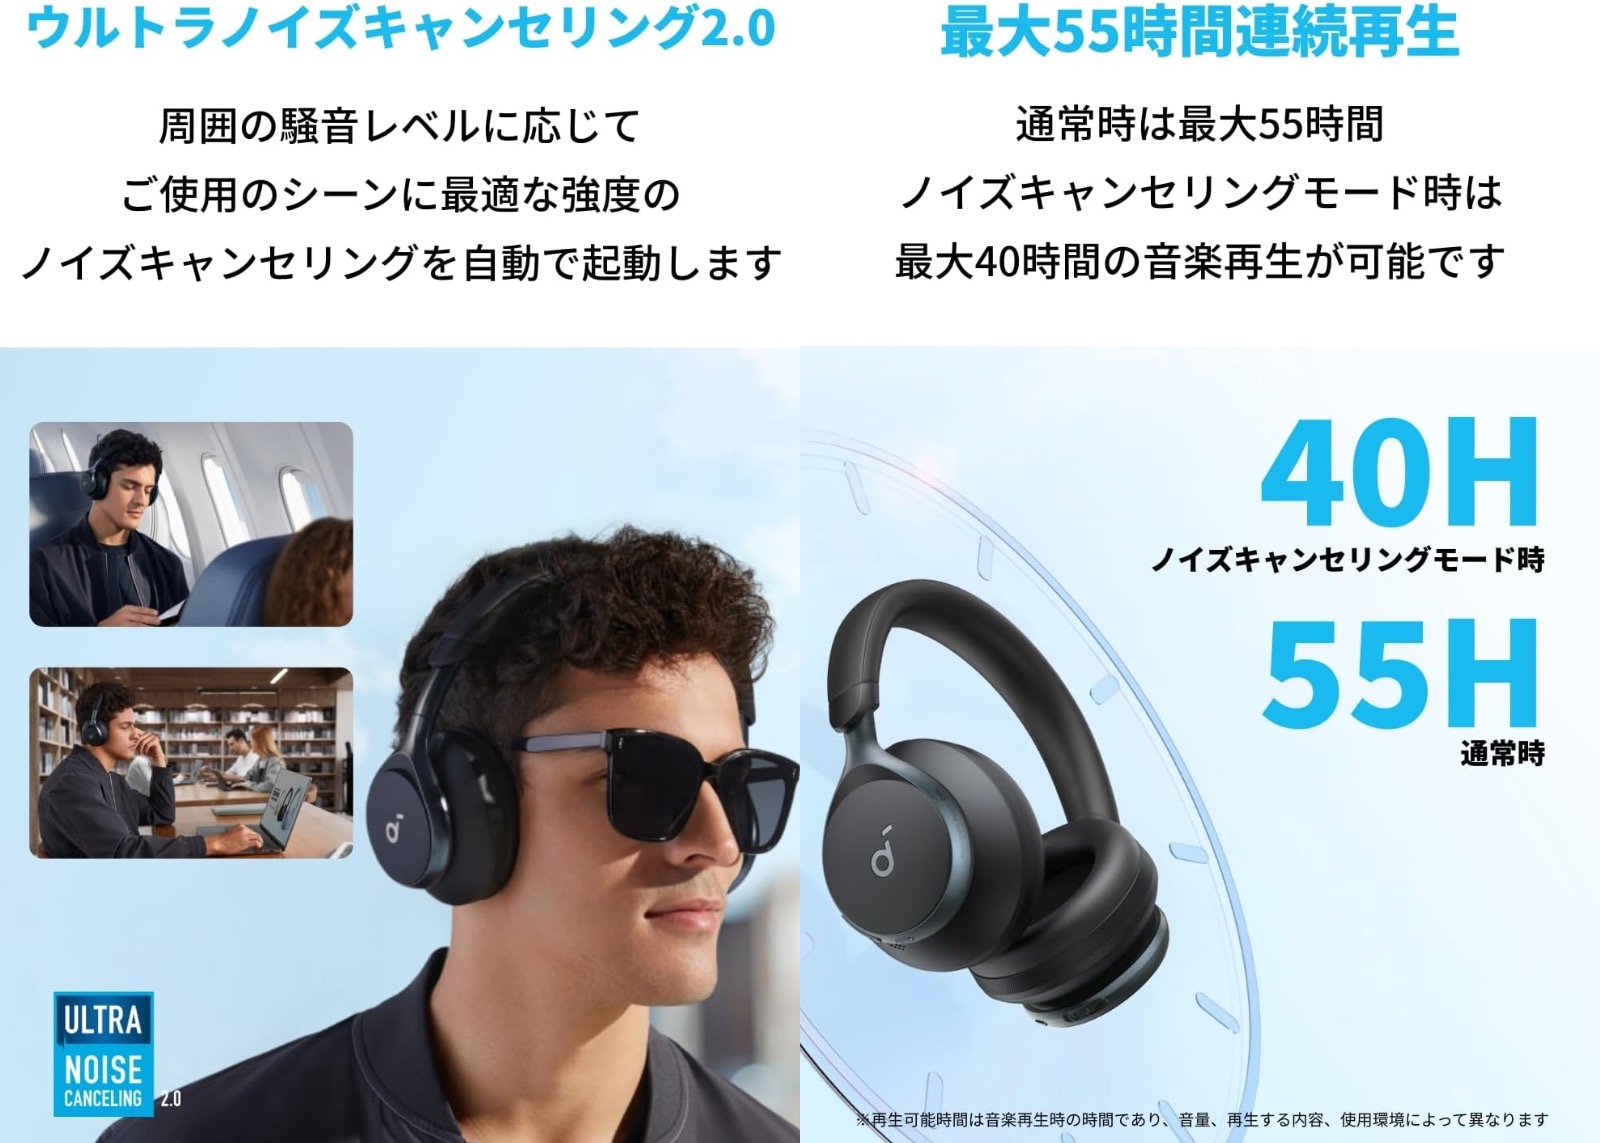 Anker Headphones specs and features